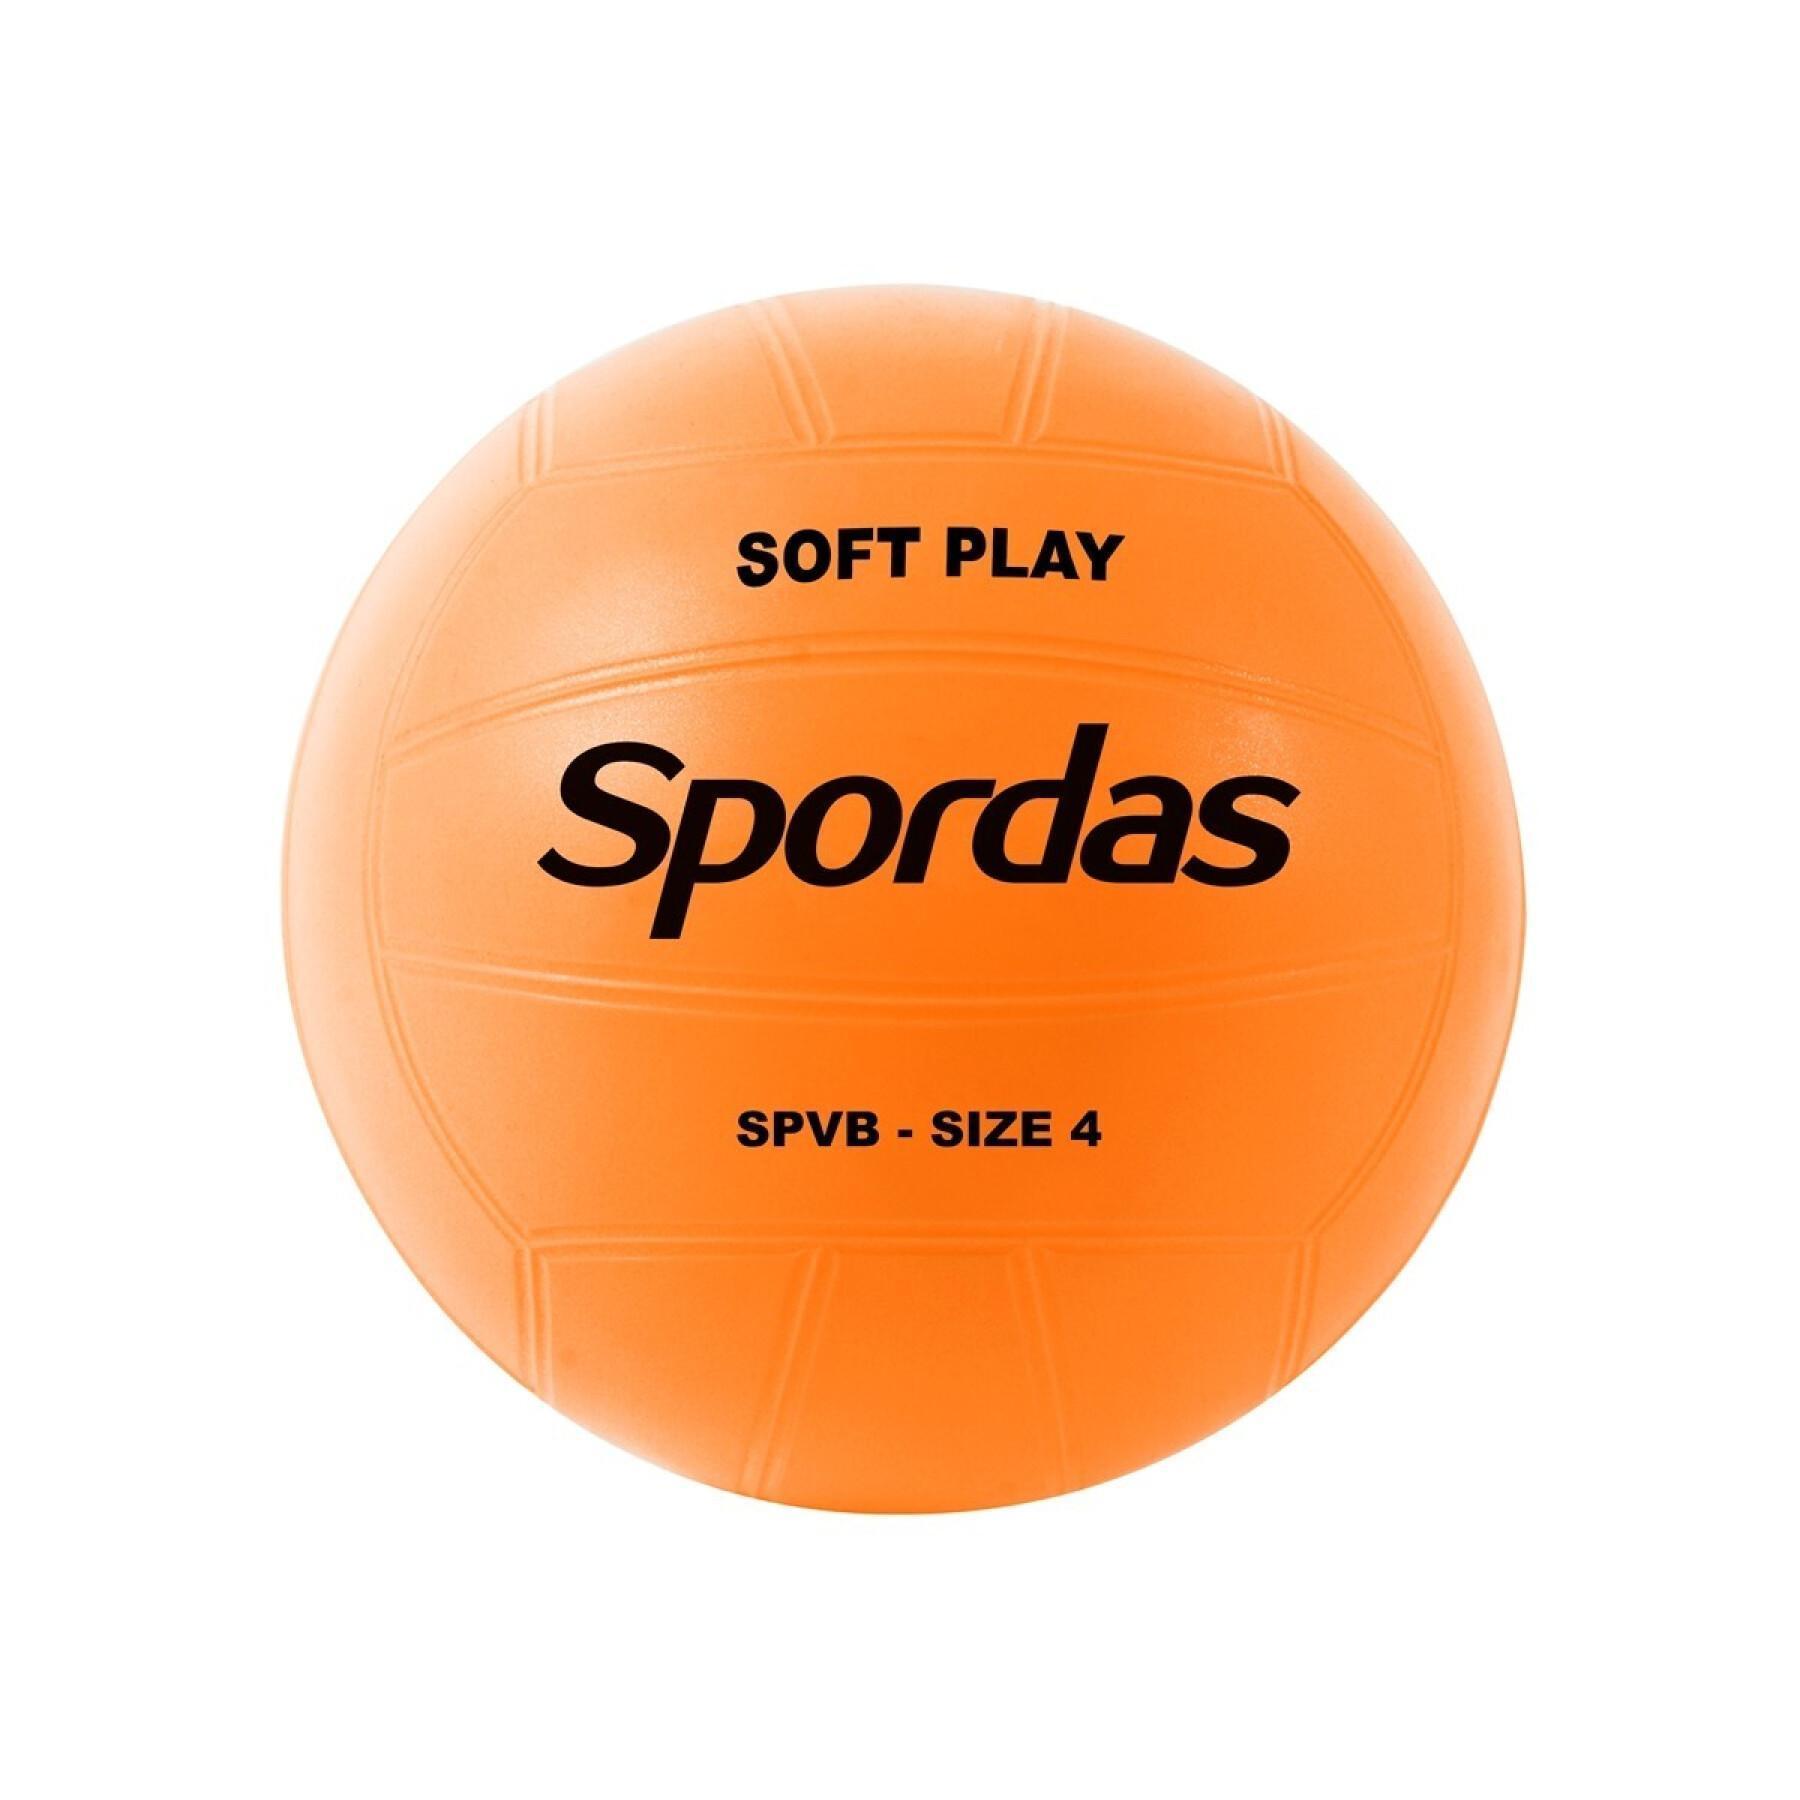 Volleyball Kind Spordas Soft Play